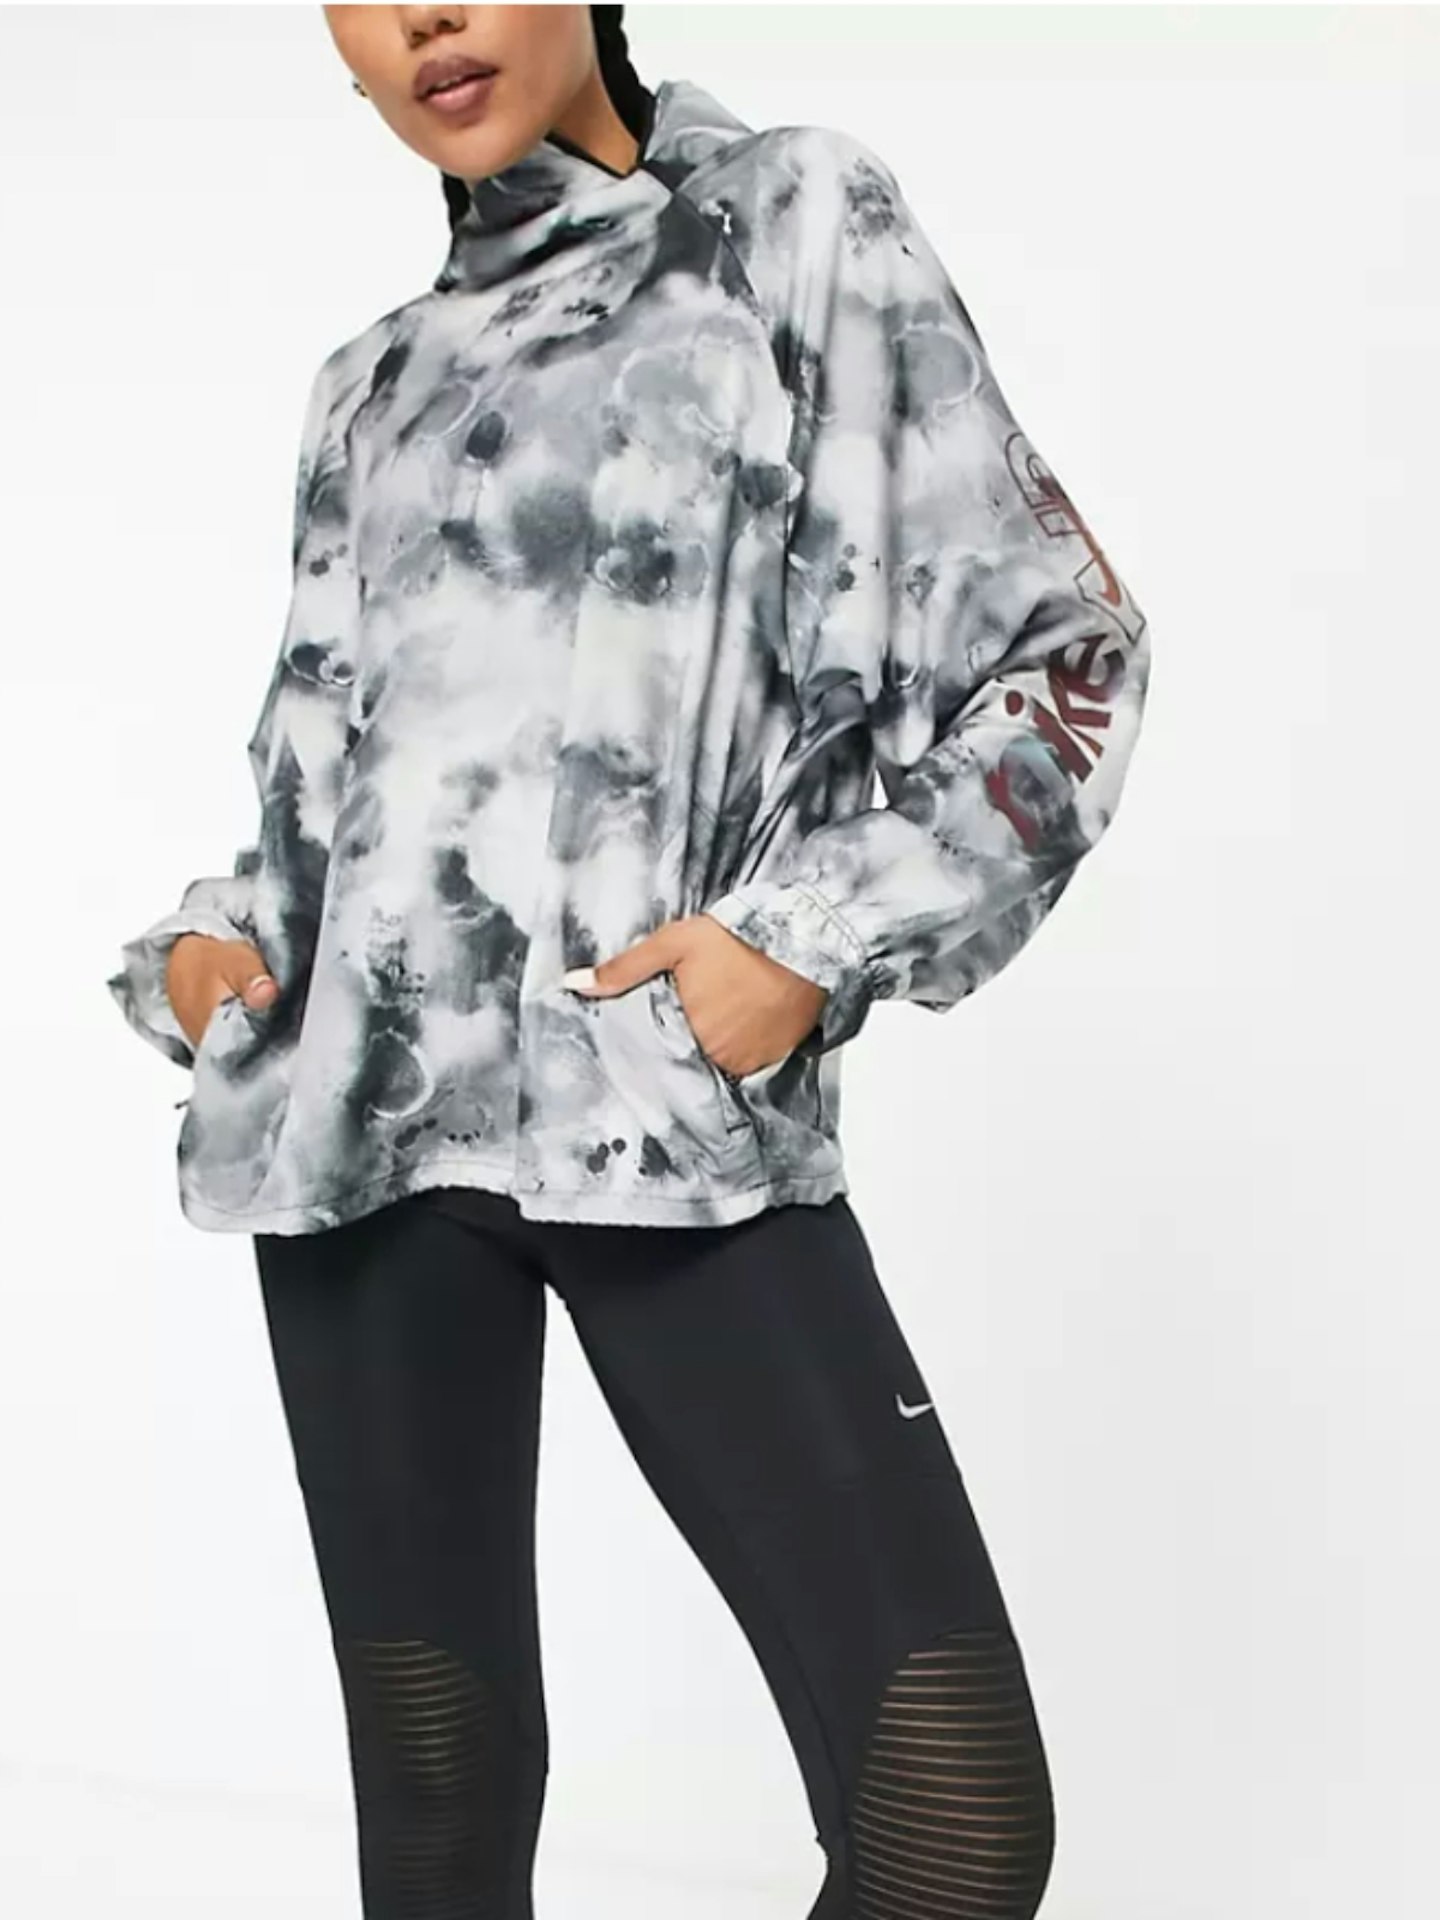 Nike Air Running Dri-FIT Overhead Jacket in Black